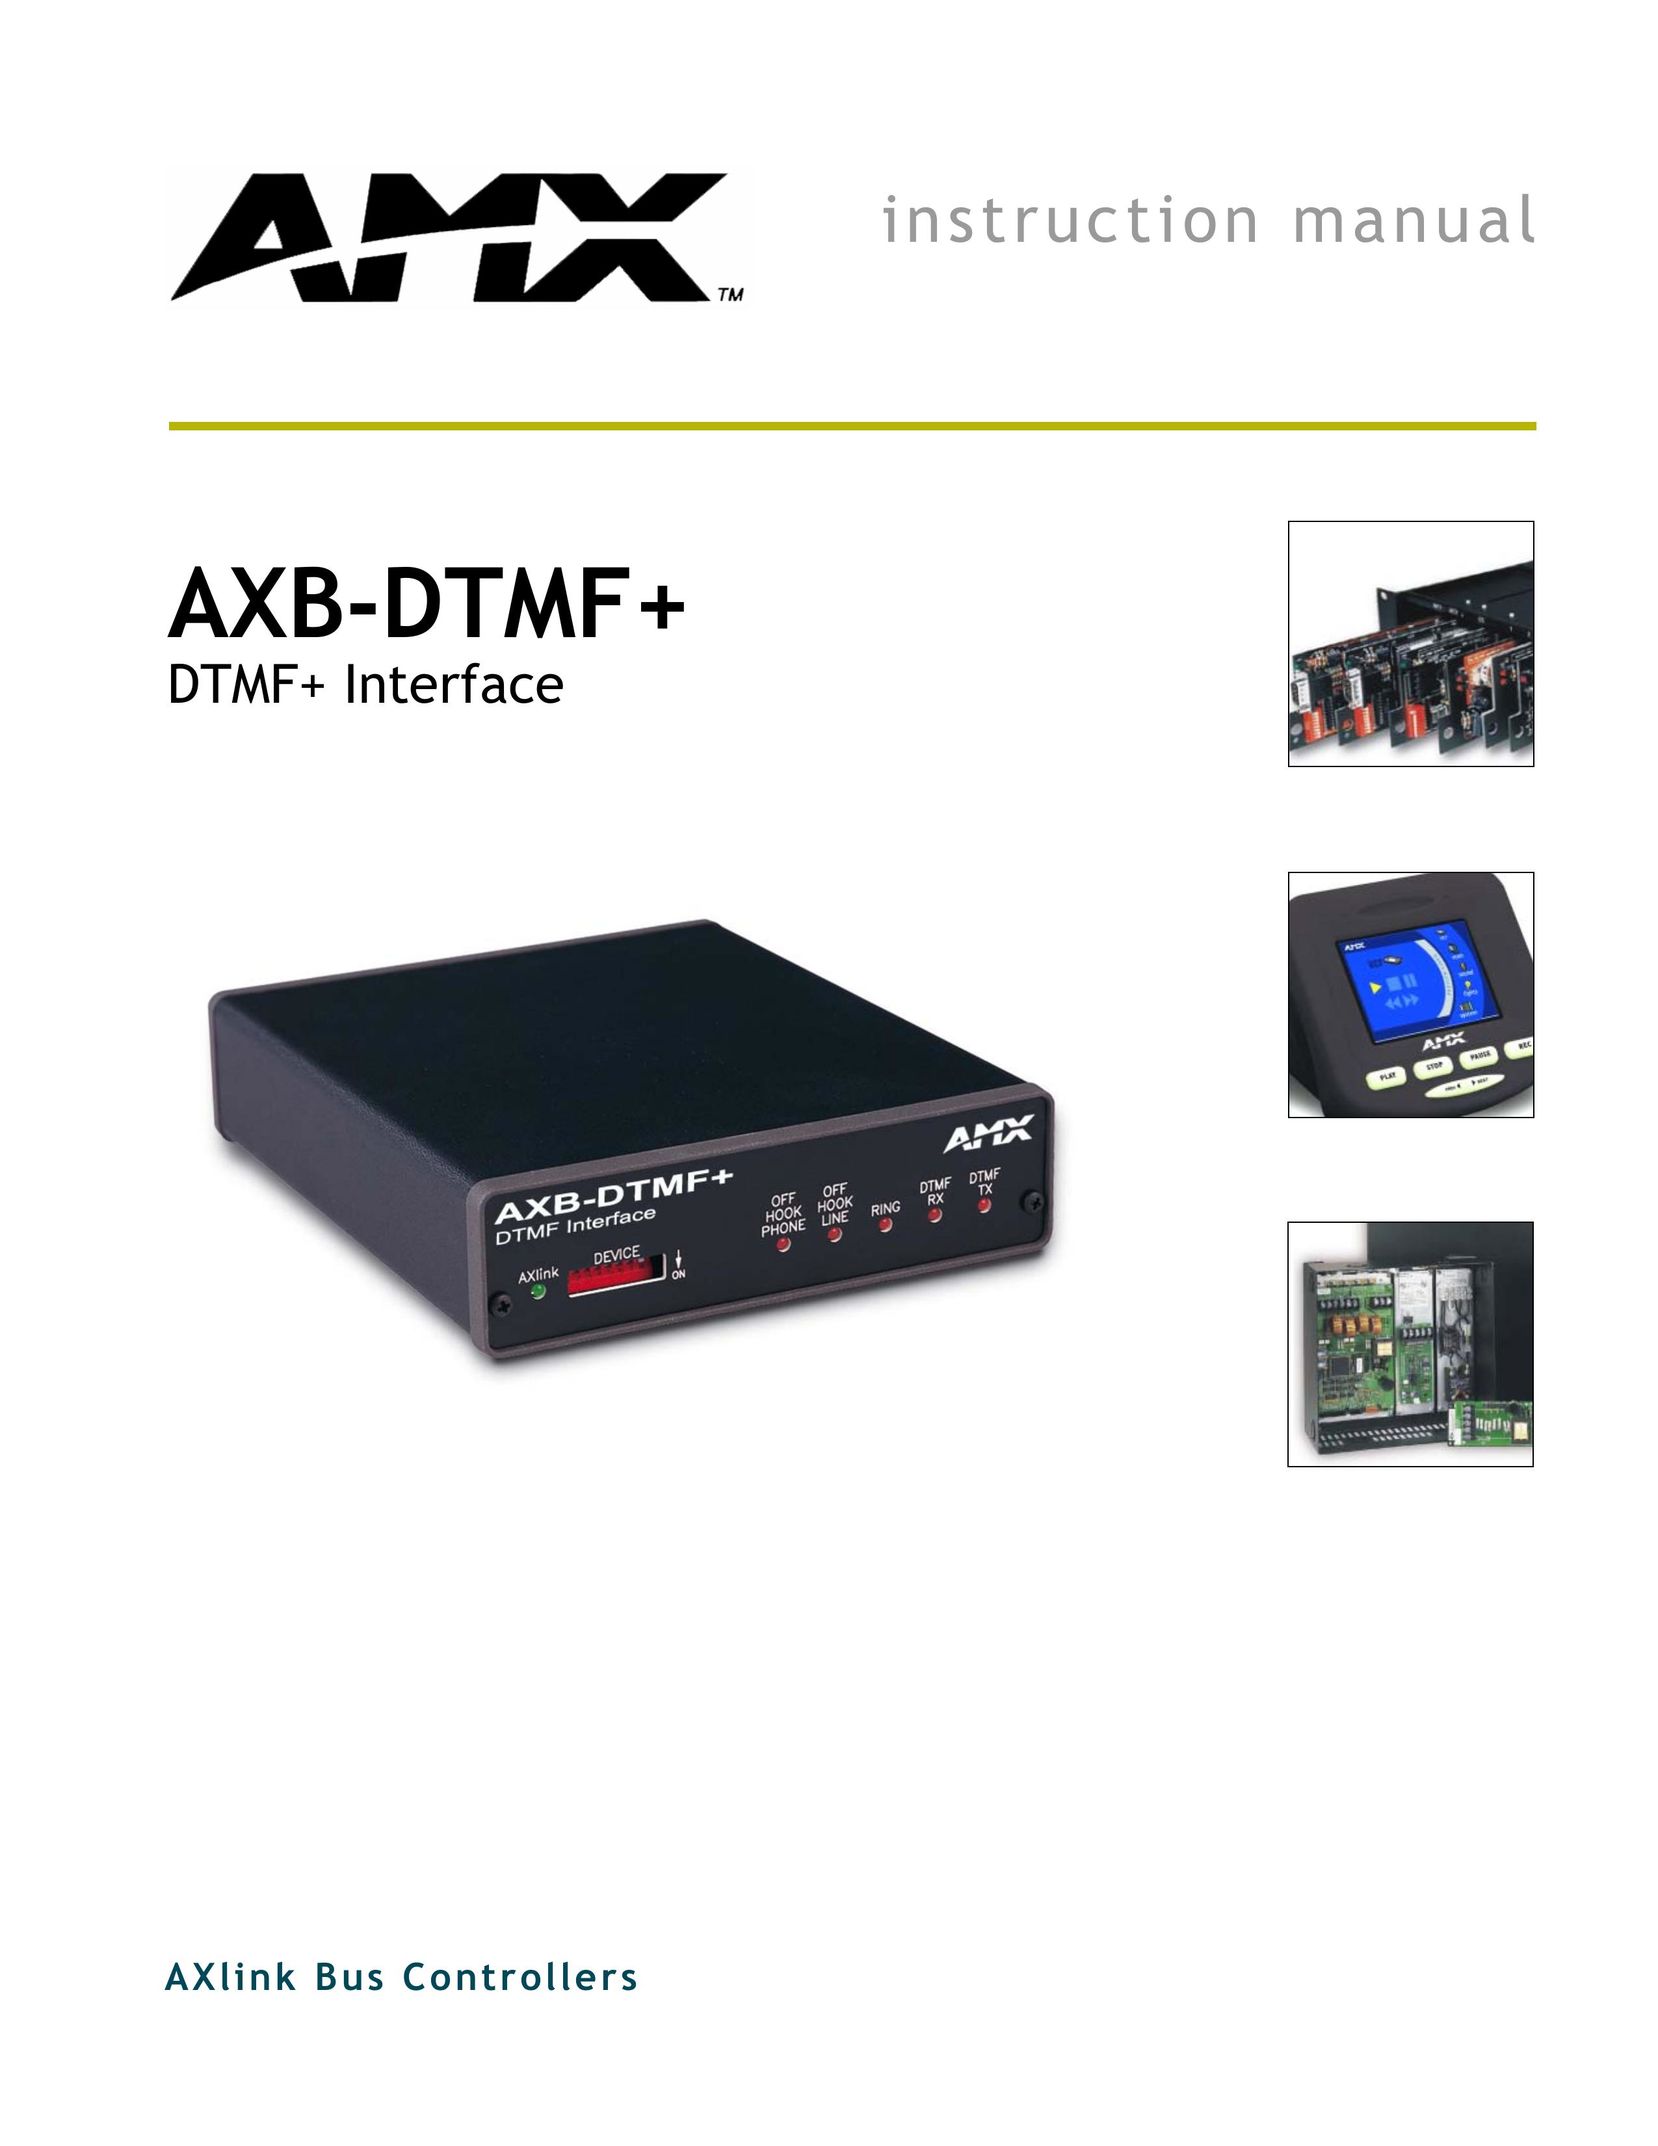 AMX AXB-DTMF+ Network Card User Manual